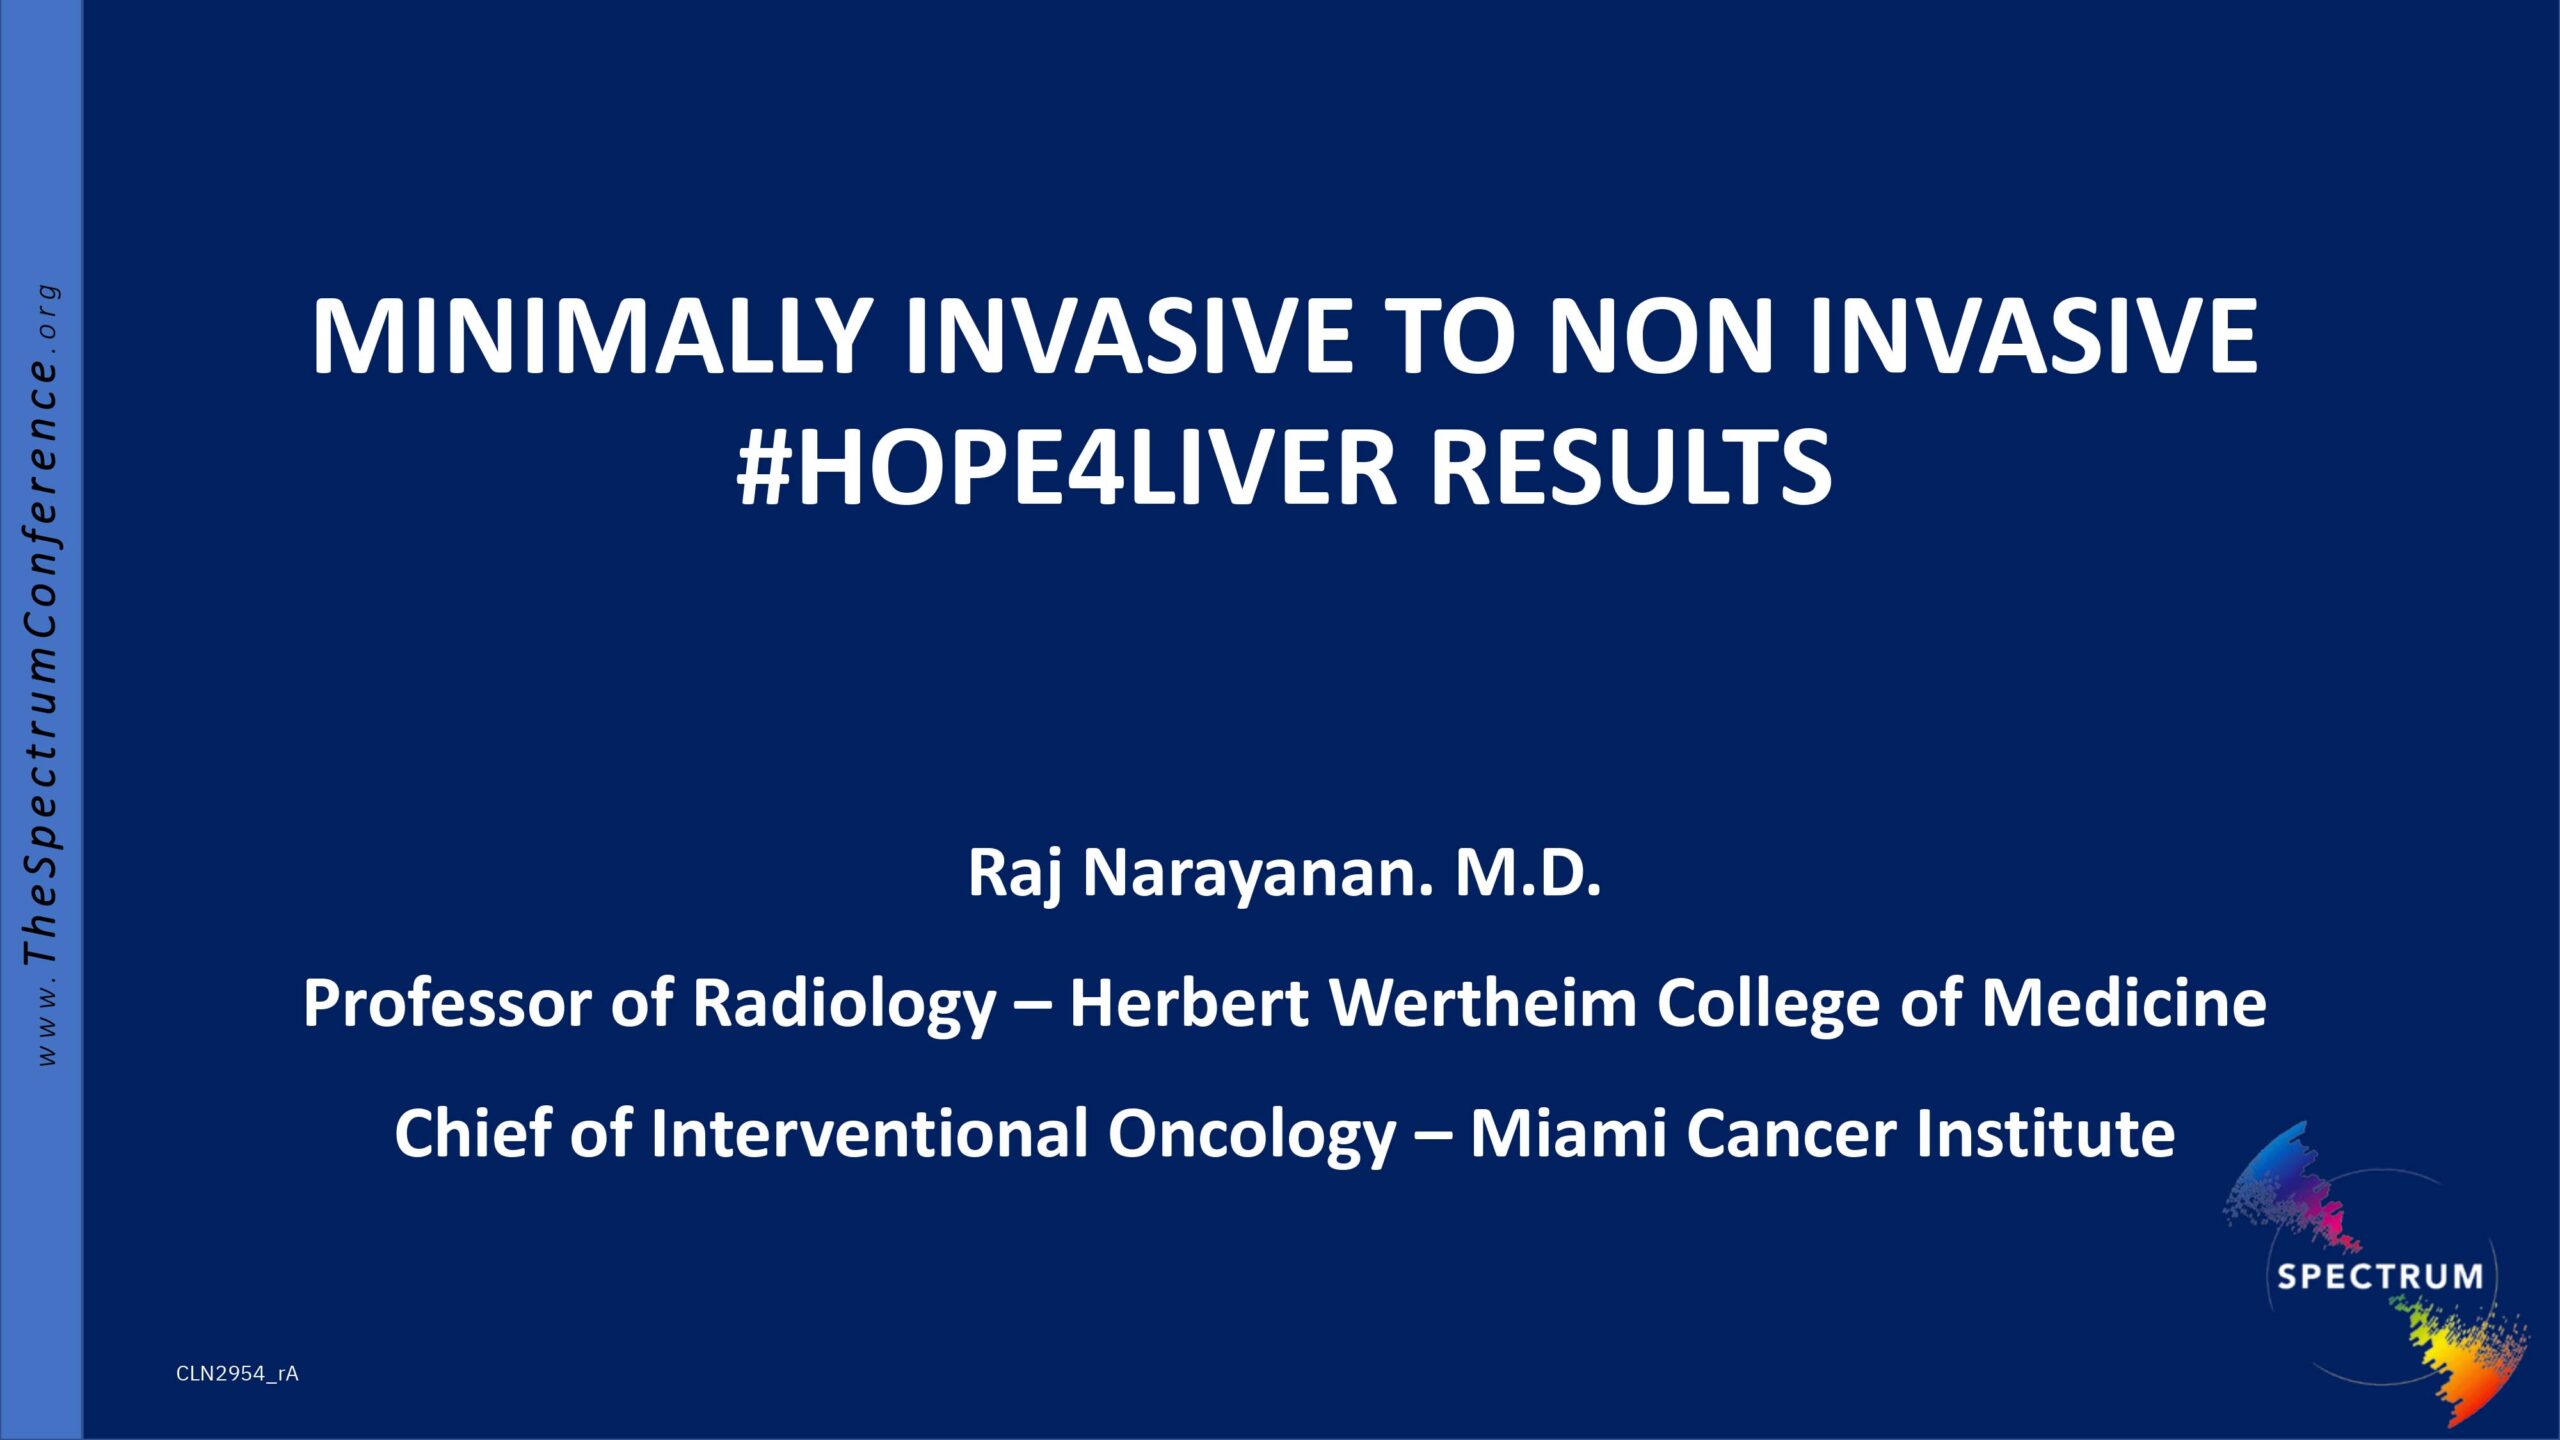 Minimally Invasive to Noninvasive- HOPE 4 LIVER Results